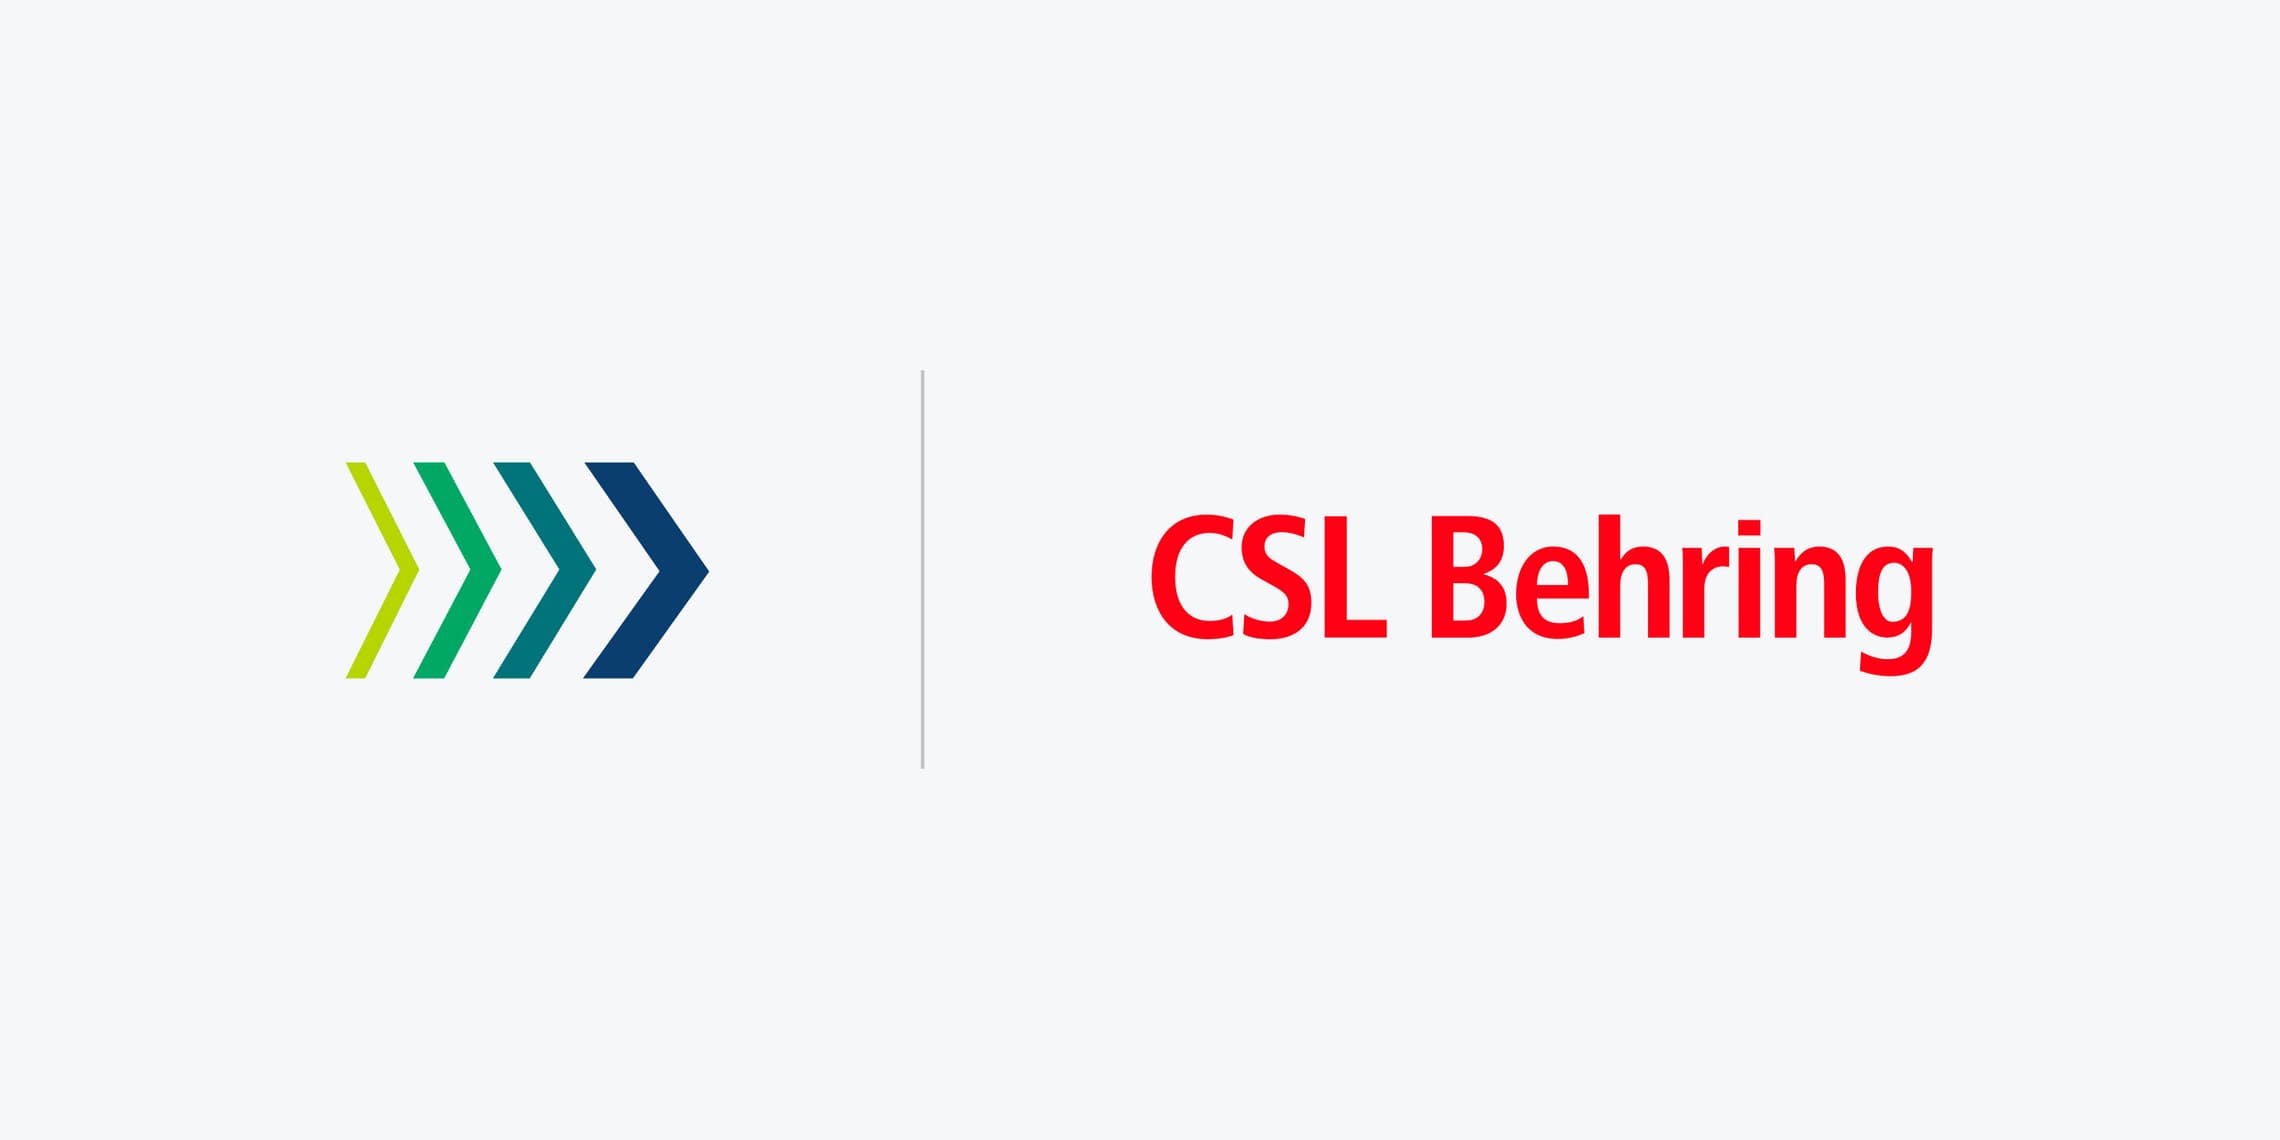 Blog body CSL Behring partnership